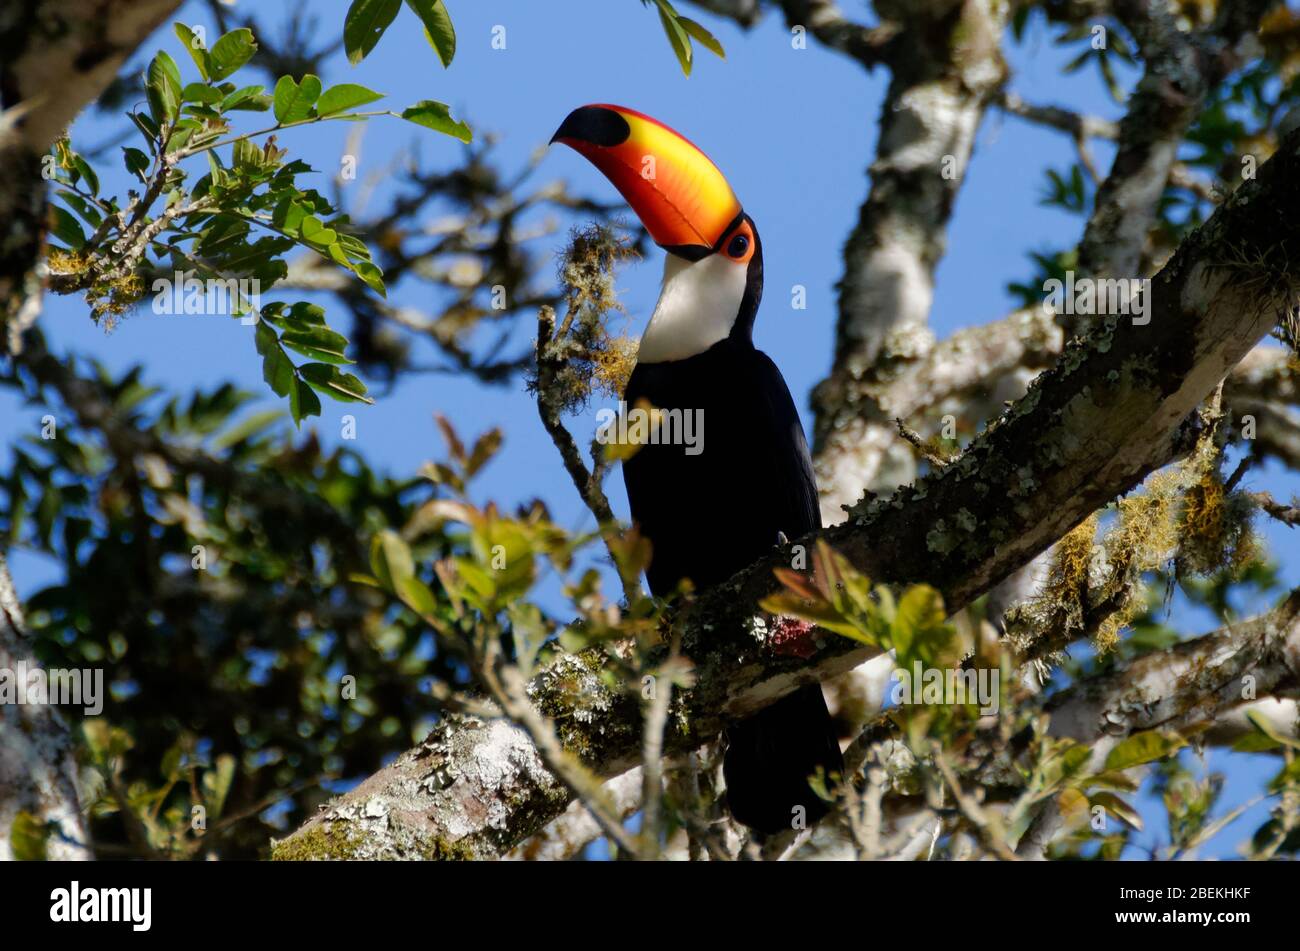 Brazillian giant Toucan bird in a tree against blue sky Stock Photo